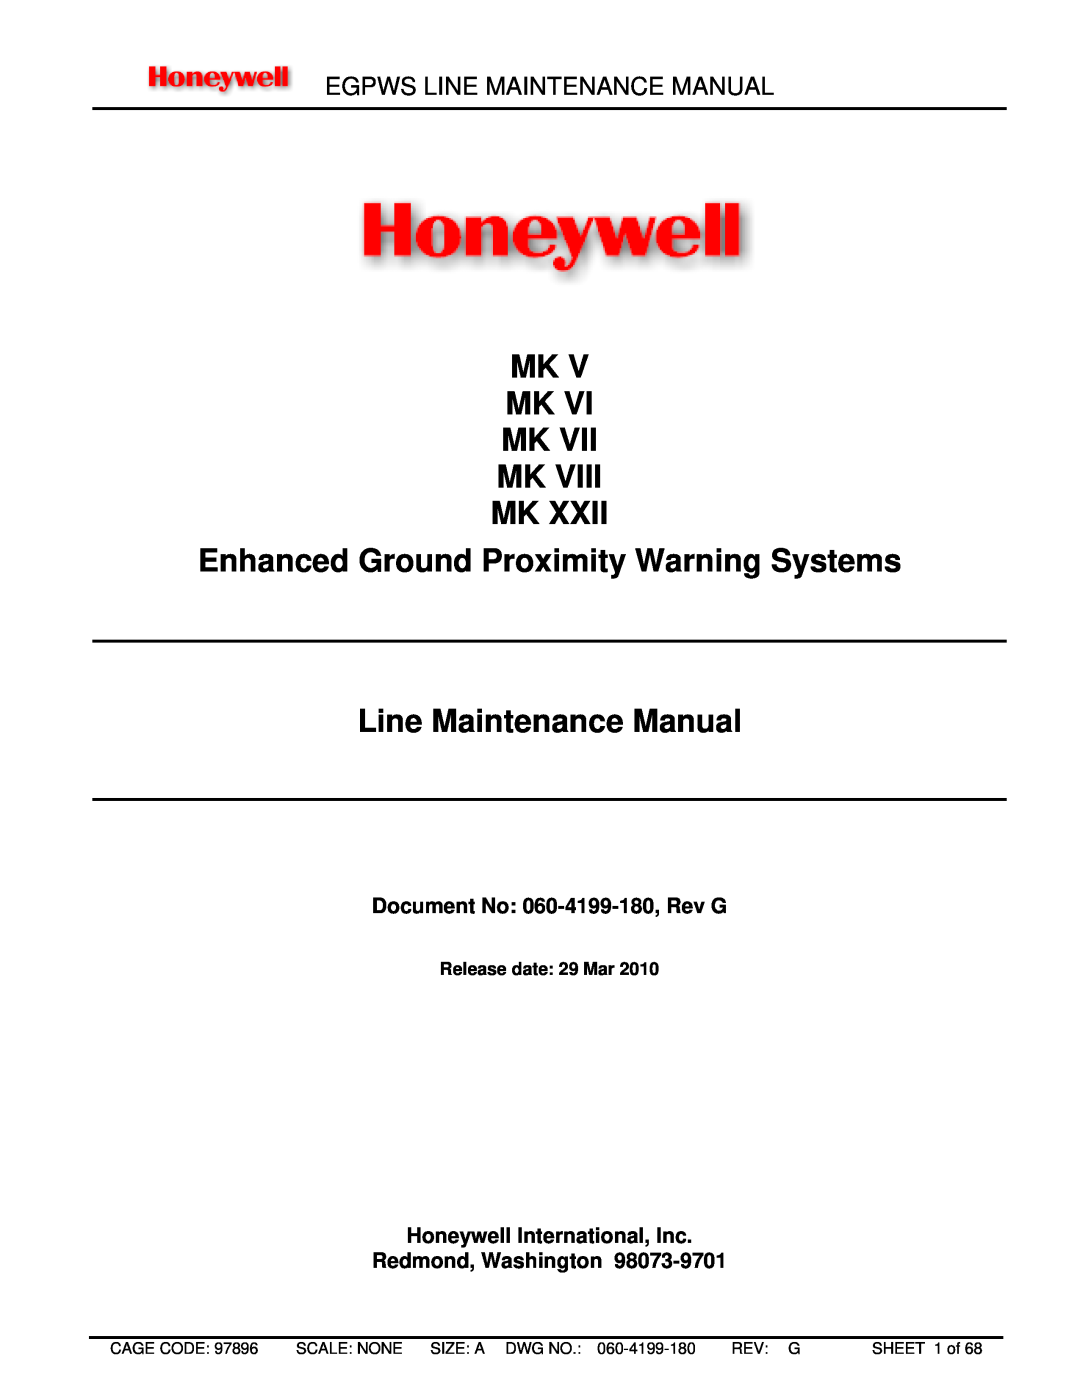 Honeywell MK VIII, MK XXII manual Egpws Line Maintenance Manual, Document No 060-4199-180,Rev G, Mk Mk Mk Mk Mk 